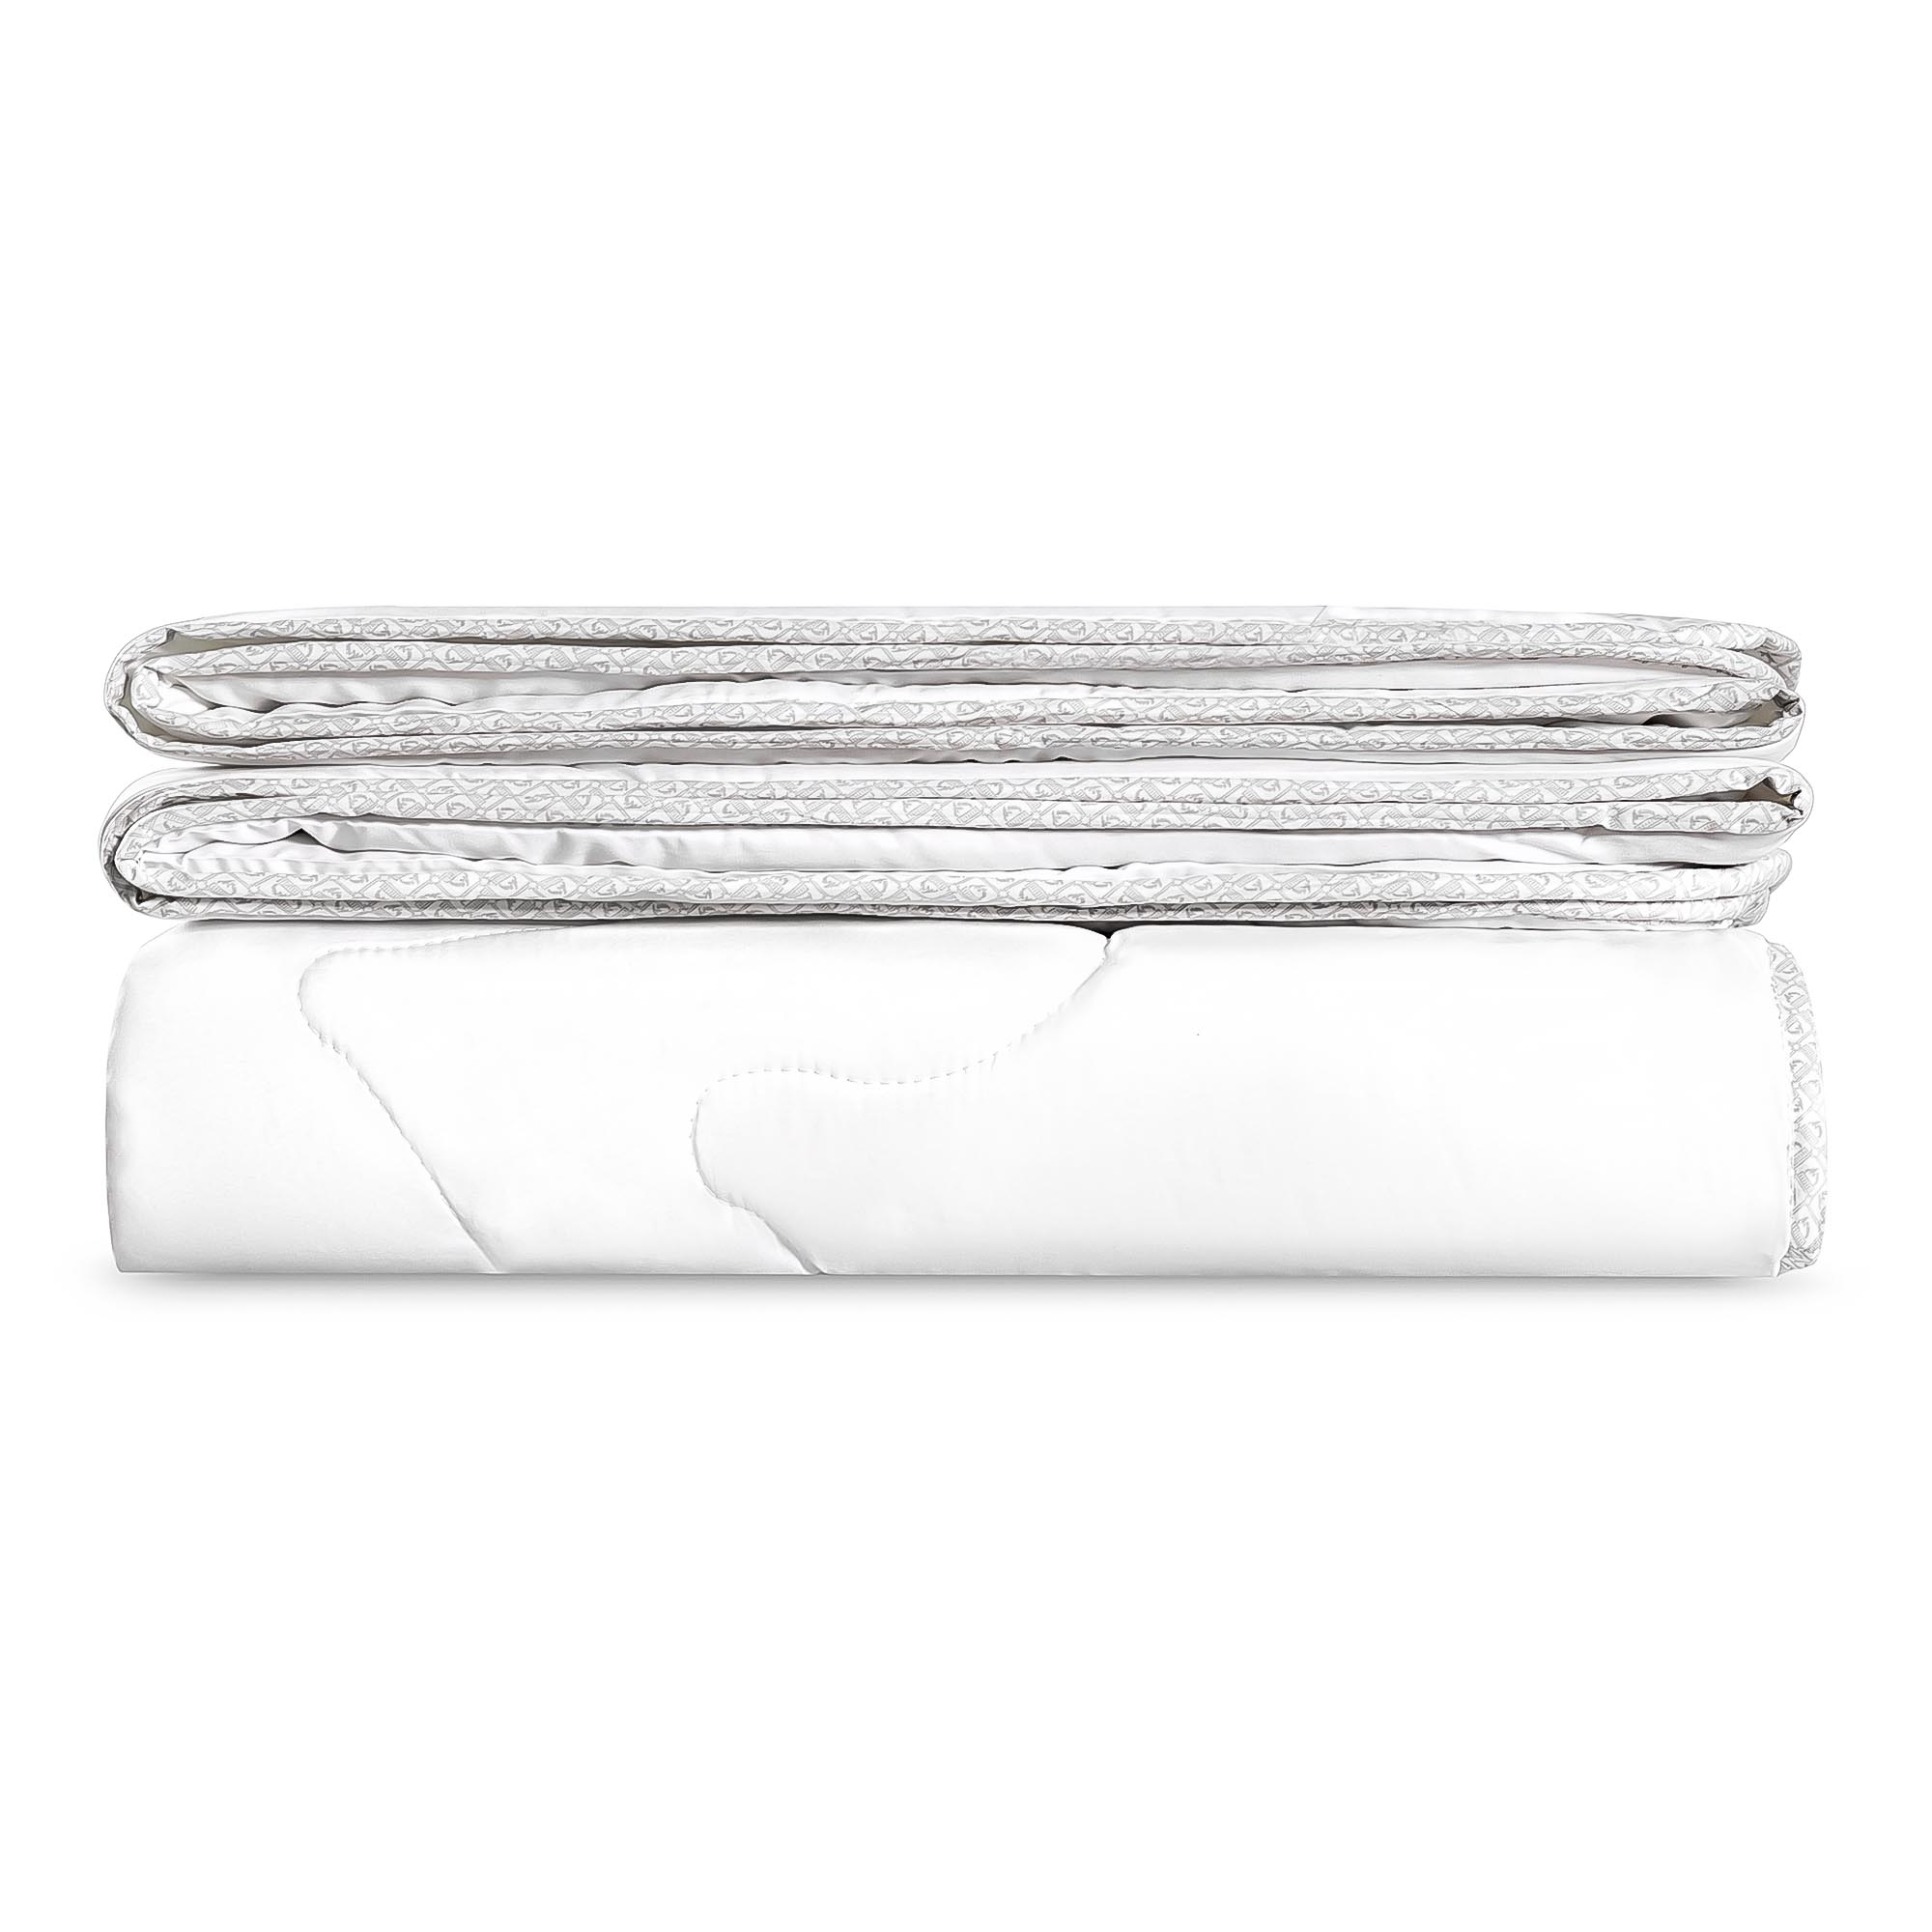 Одеяло Estia фальтерона среднее 140х200, размер 140х200 см - фото 2